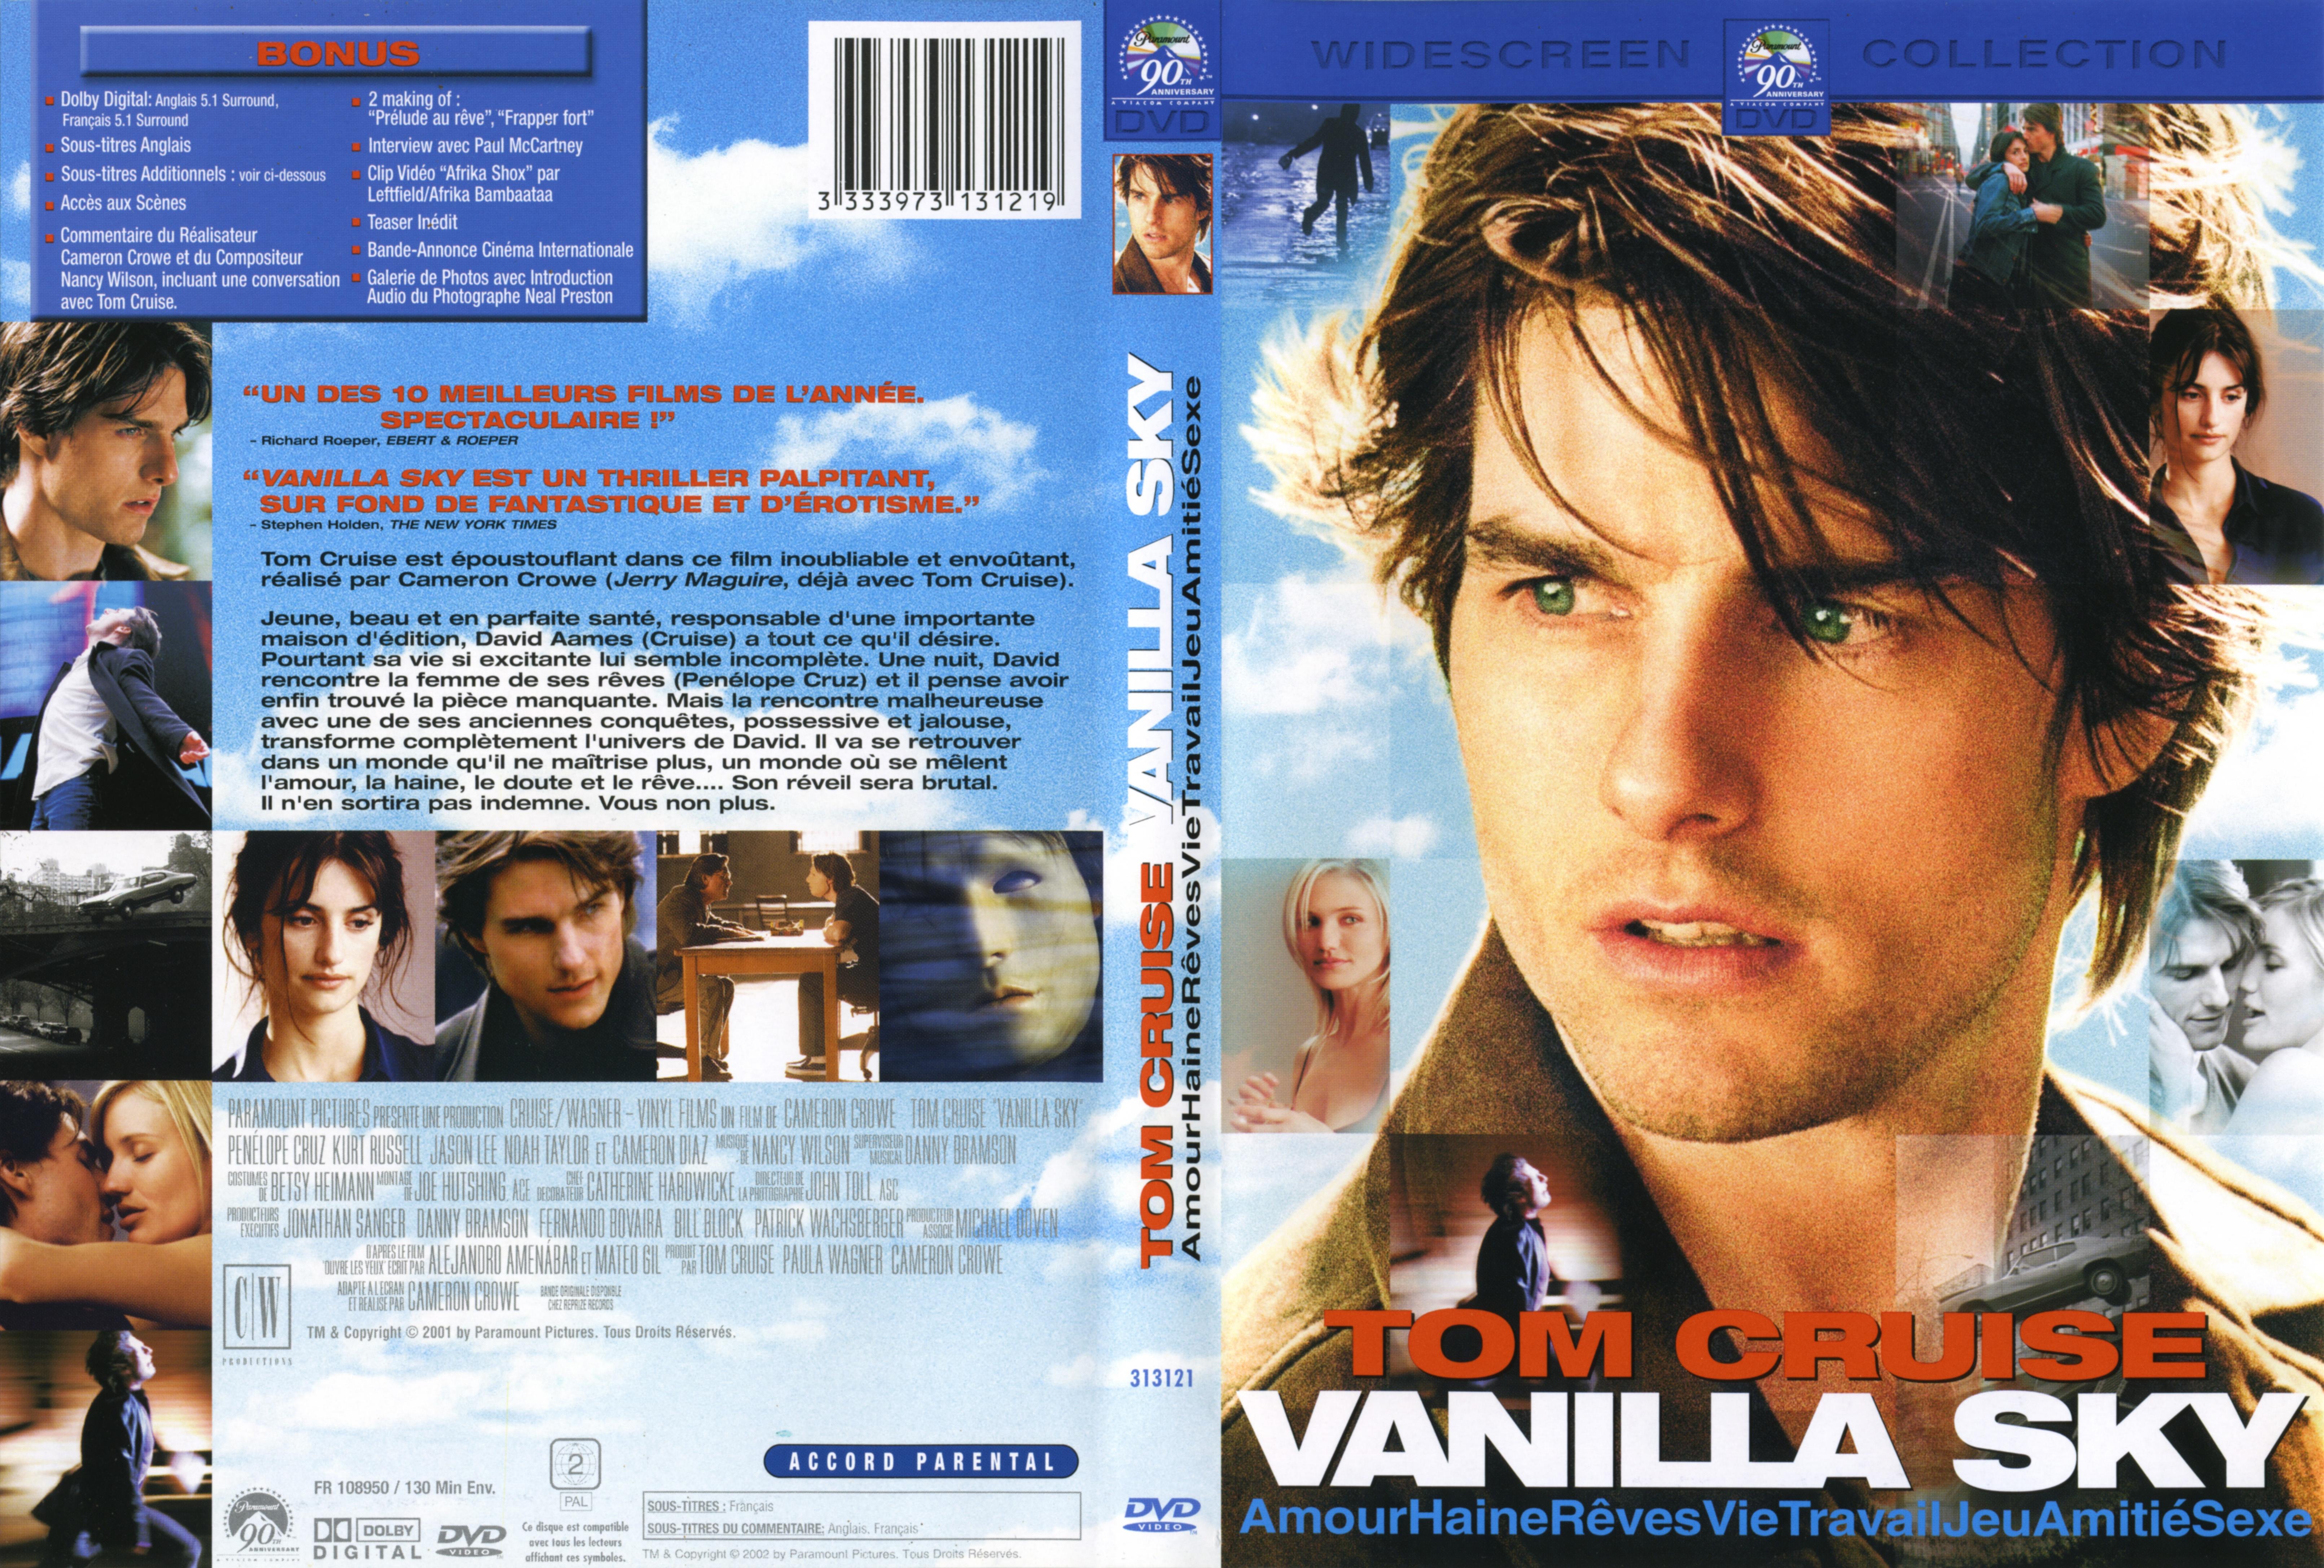 Jaquette DVD Vanilla sky